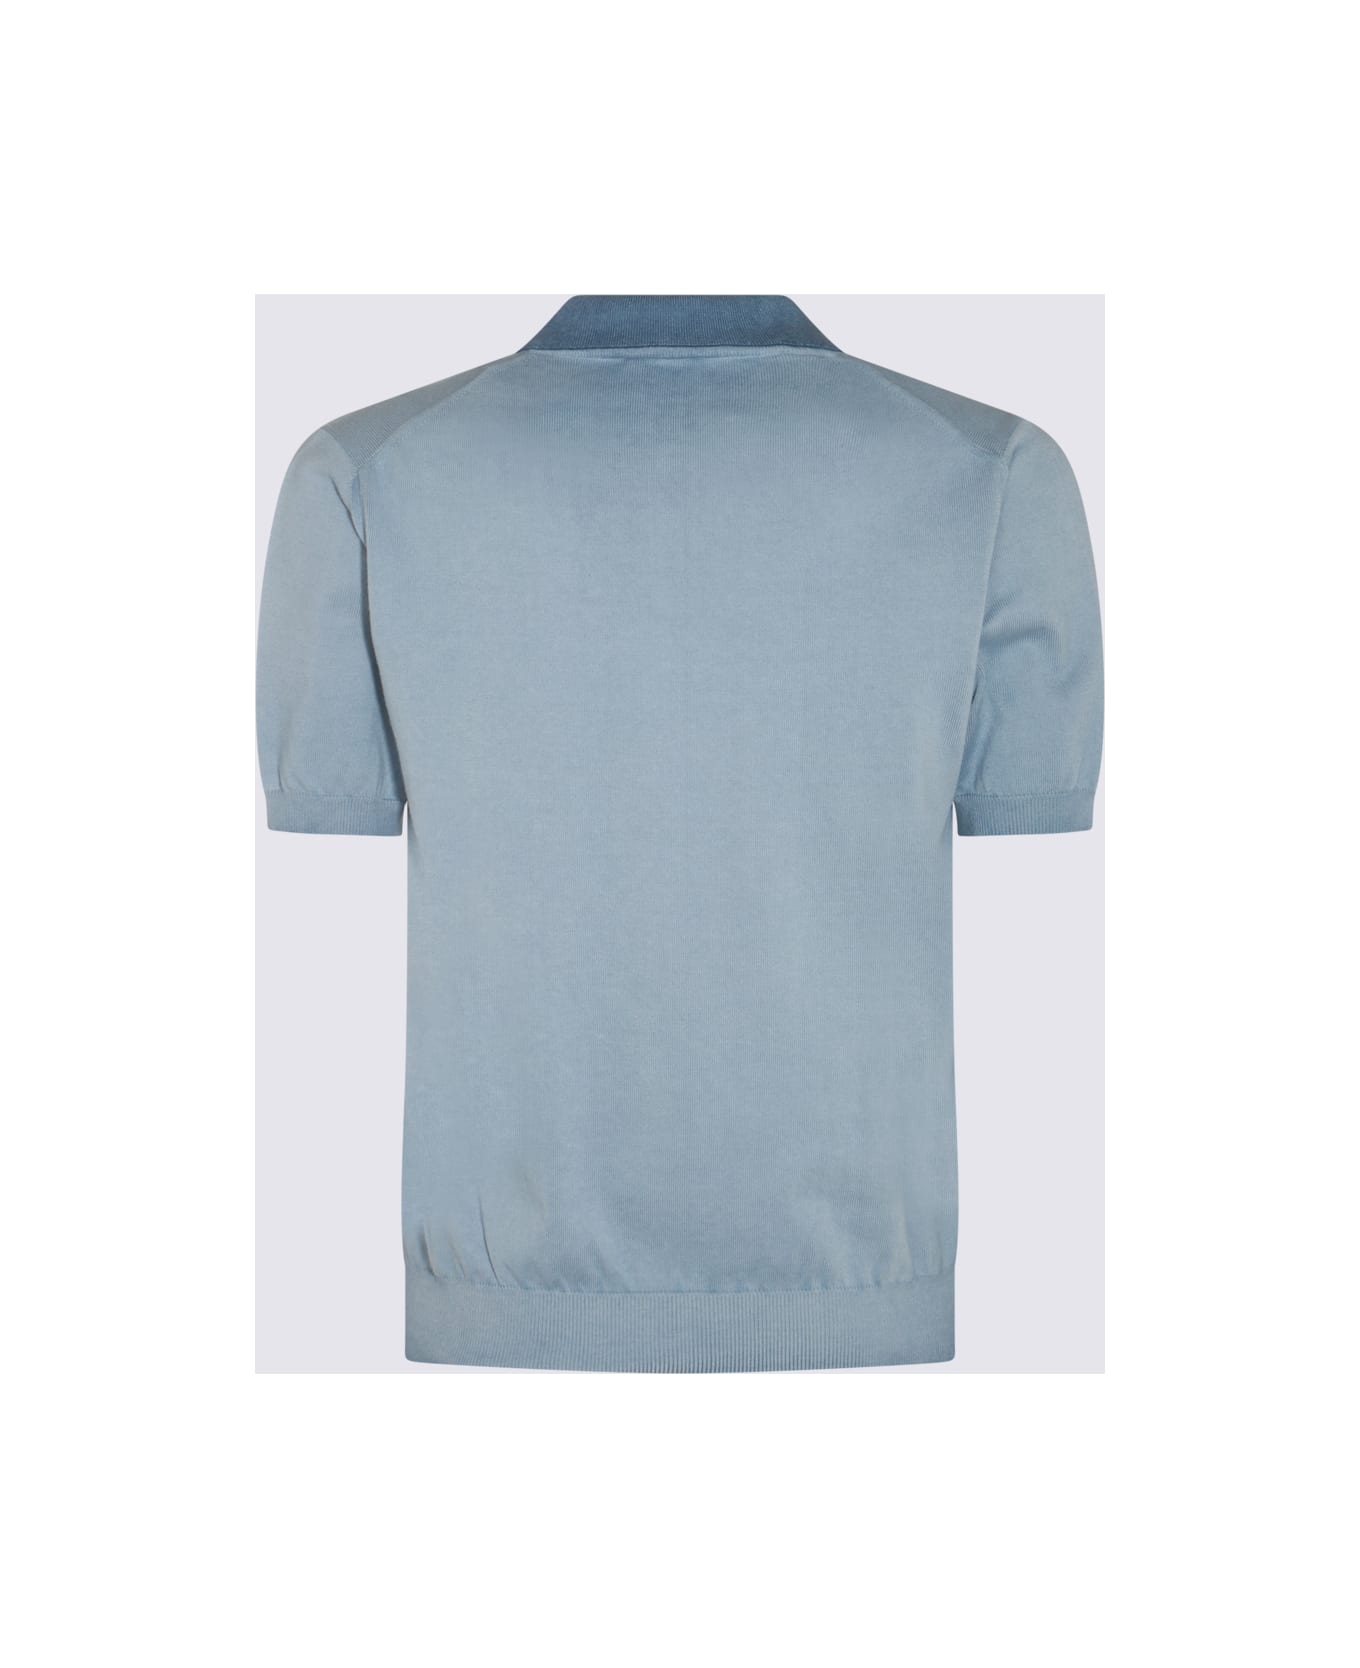 Altea Light Blue Cotton Polo Shirt - Carta da zucchero ポロシャツ